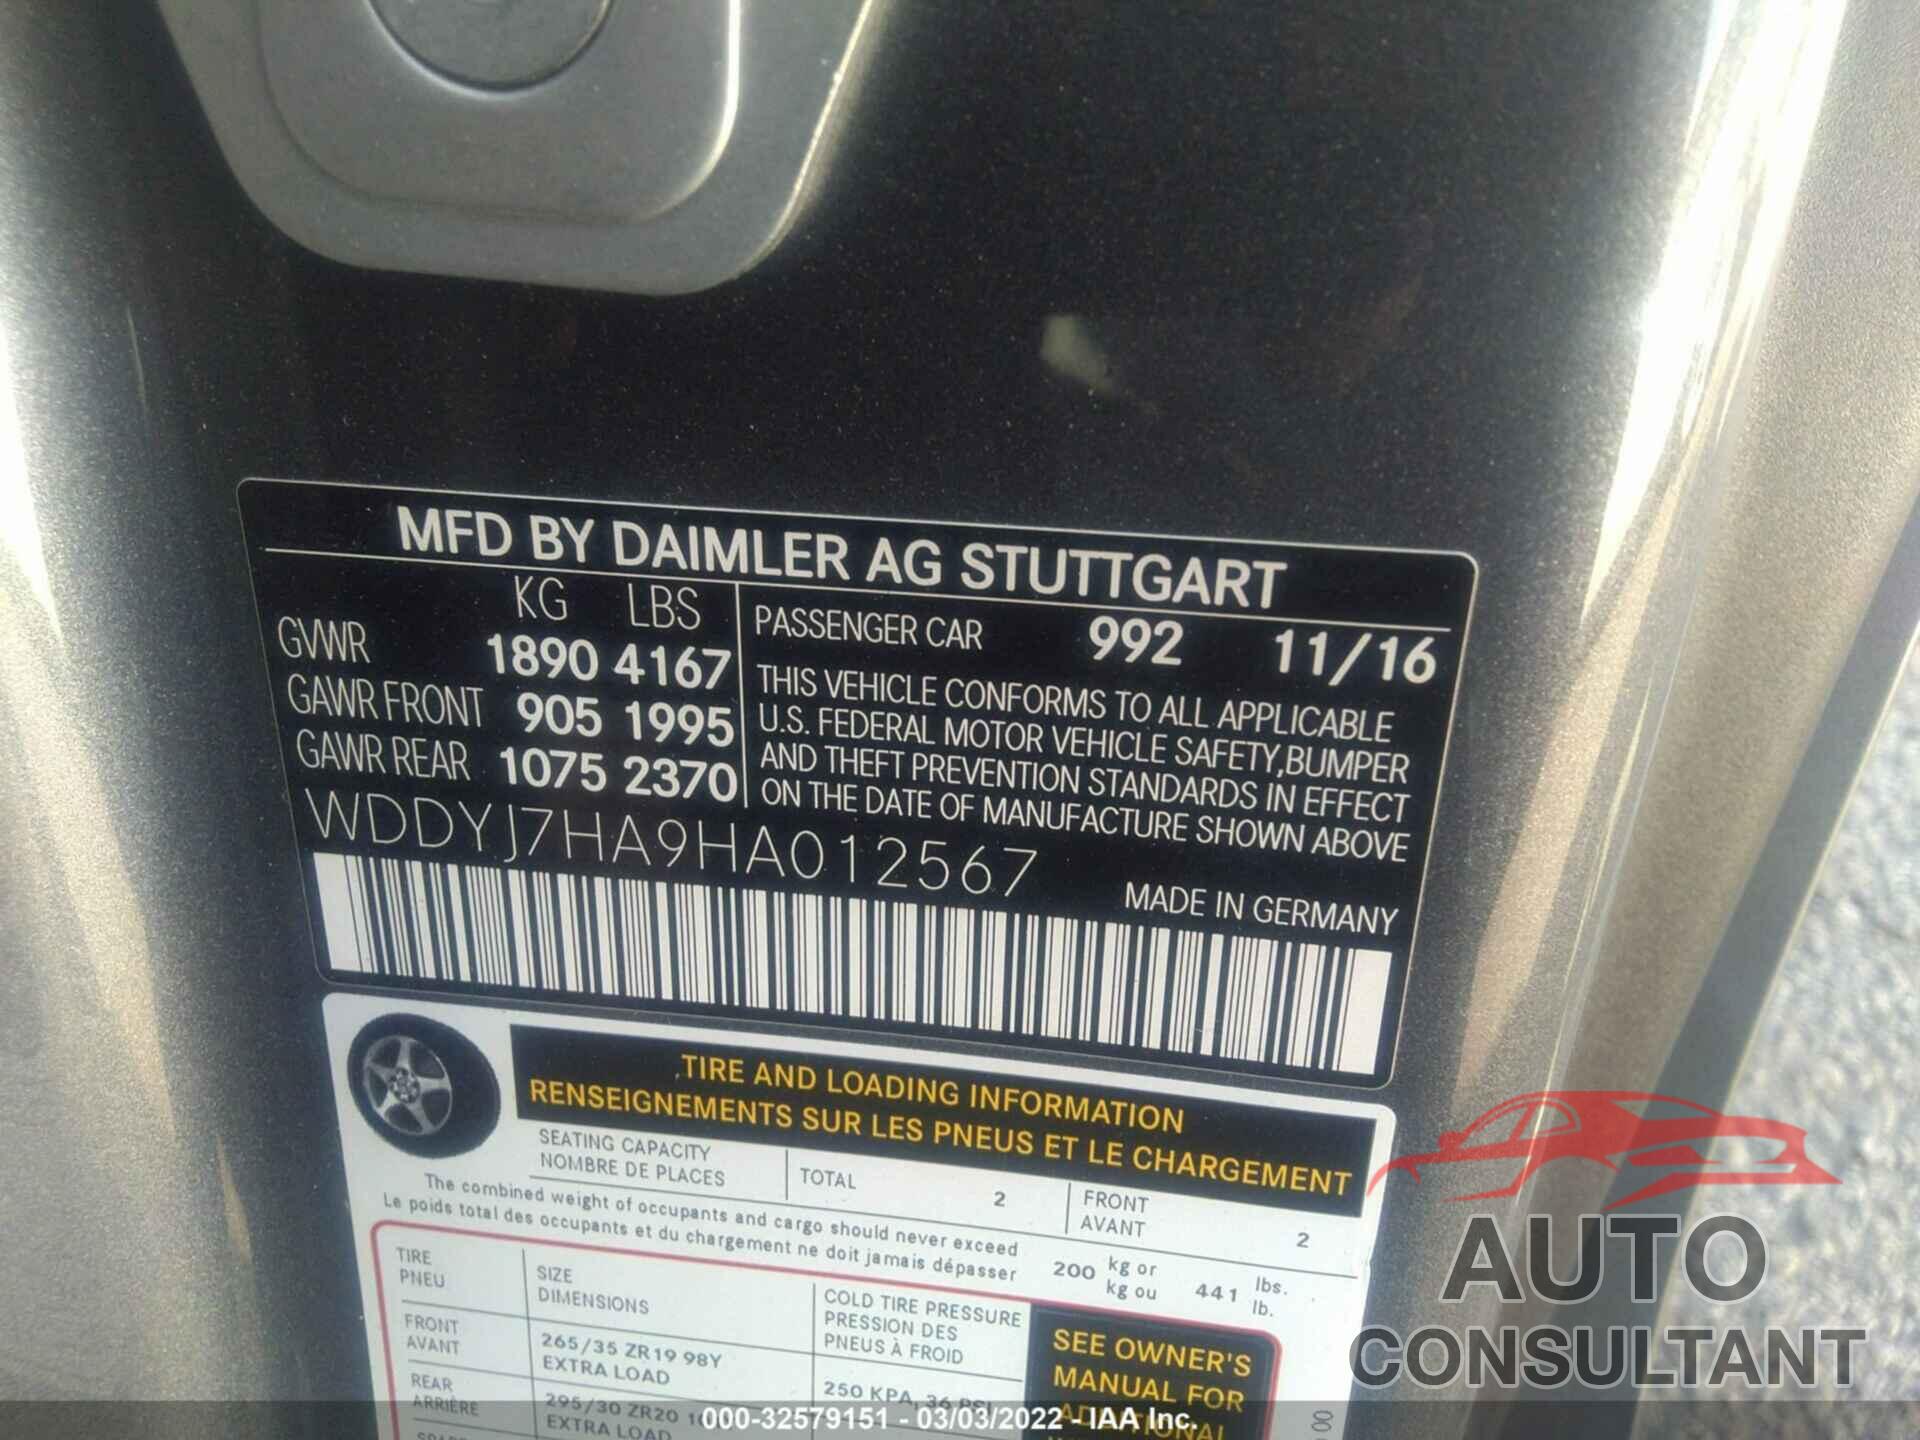 MERCEDES-BENZ AMG GT 2017 - WDDYJ7HA9HA012567